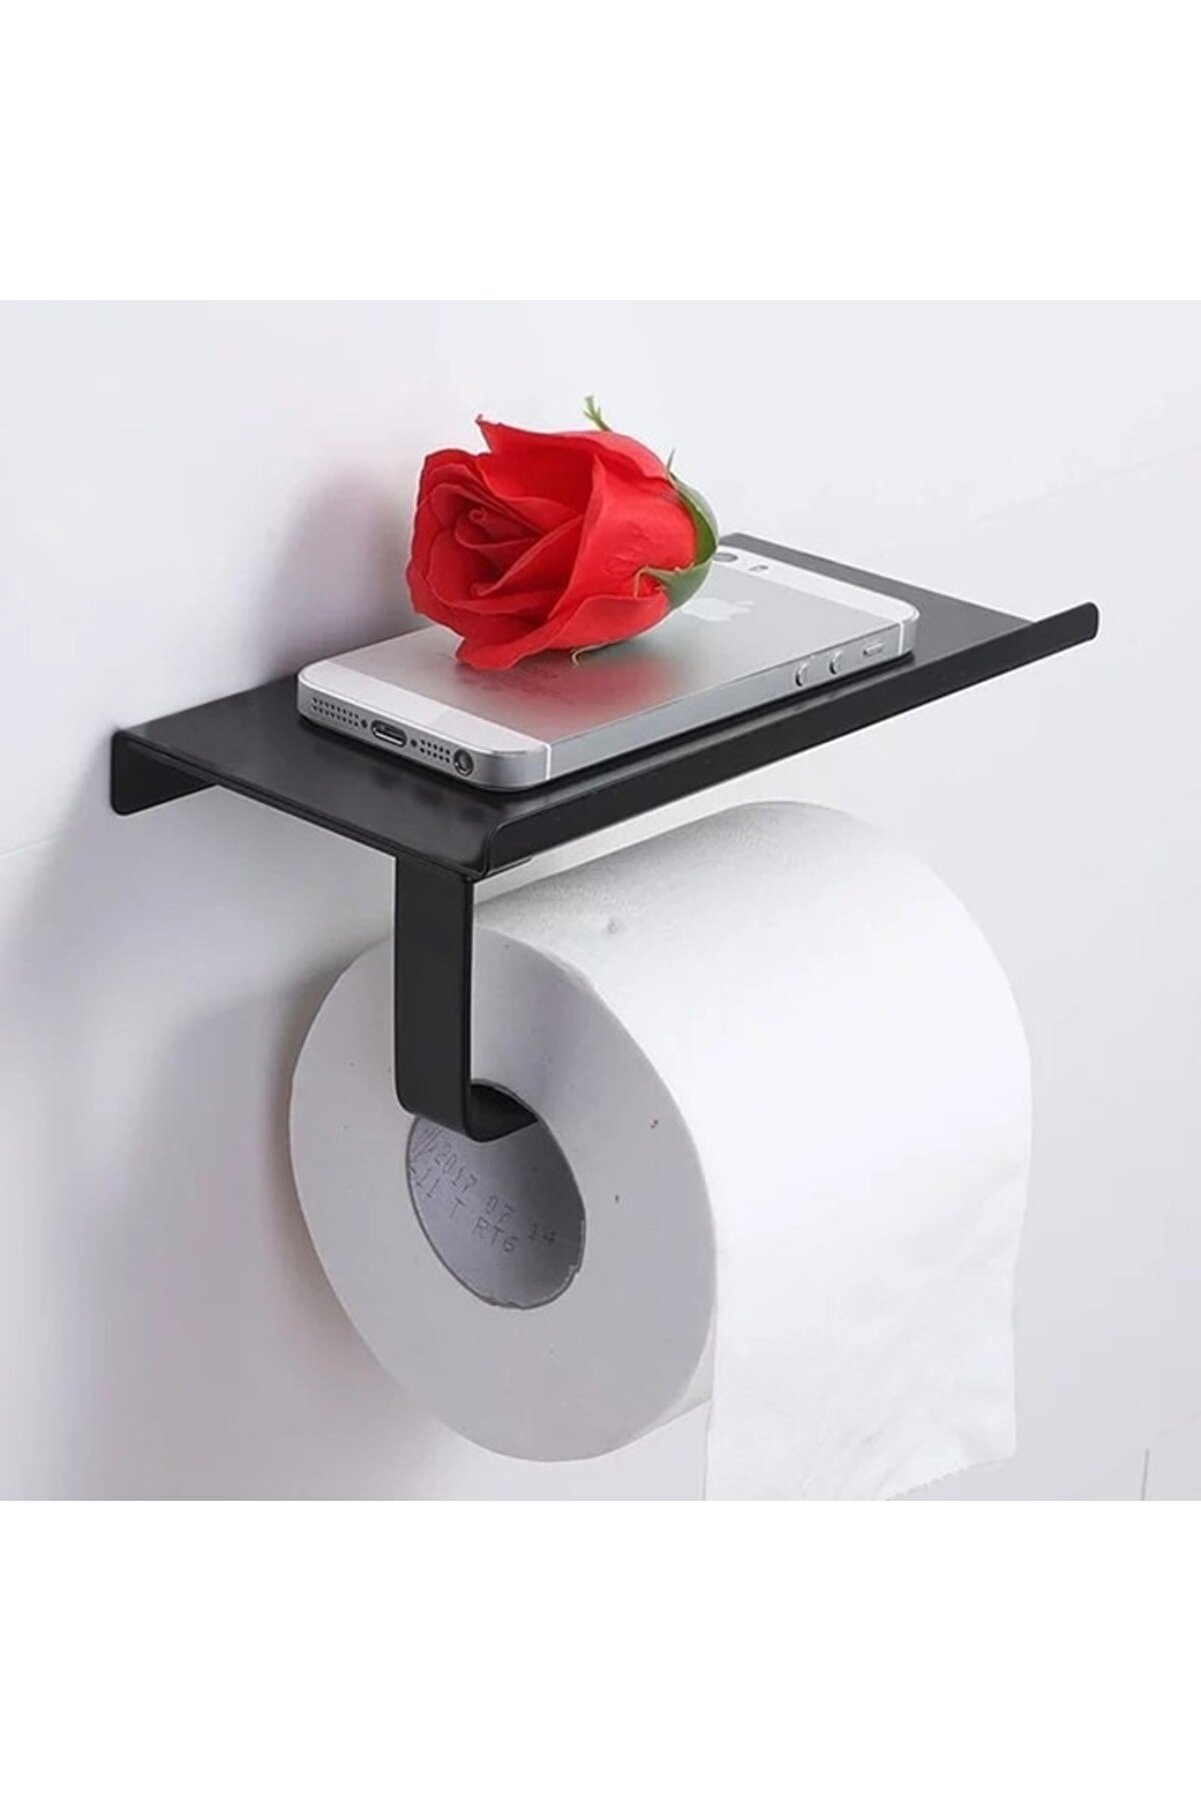 Alper Banyo Siyah Telefon Raflı Tuvalet Kağıtlığı Cep Telefonu Tutmalı Raf